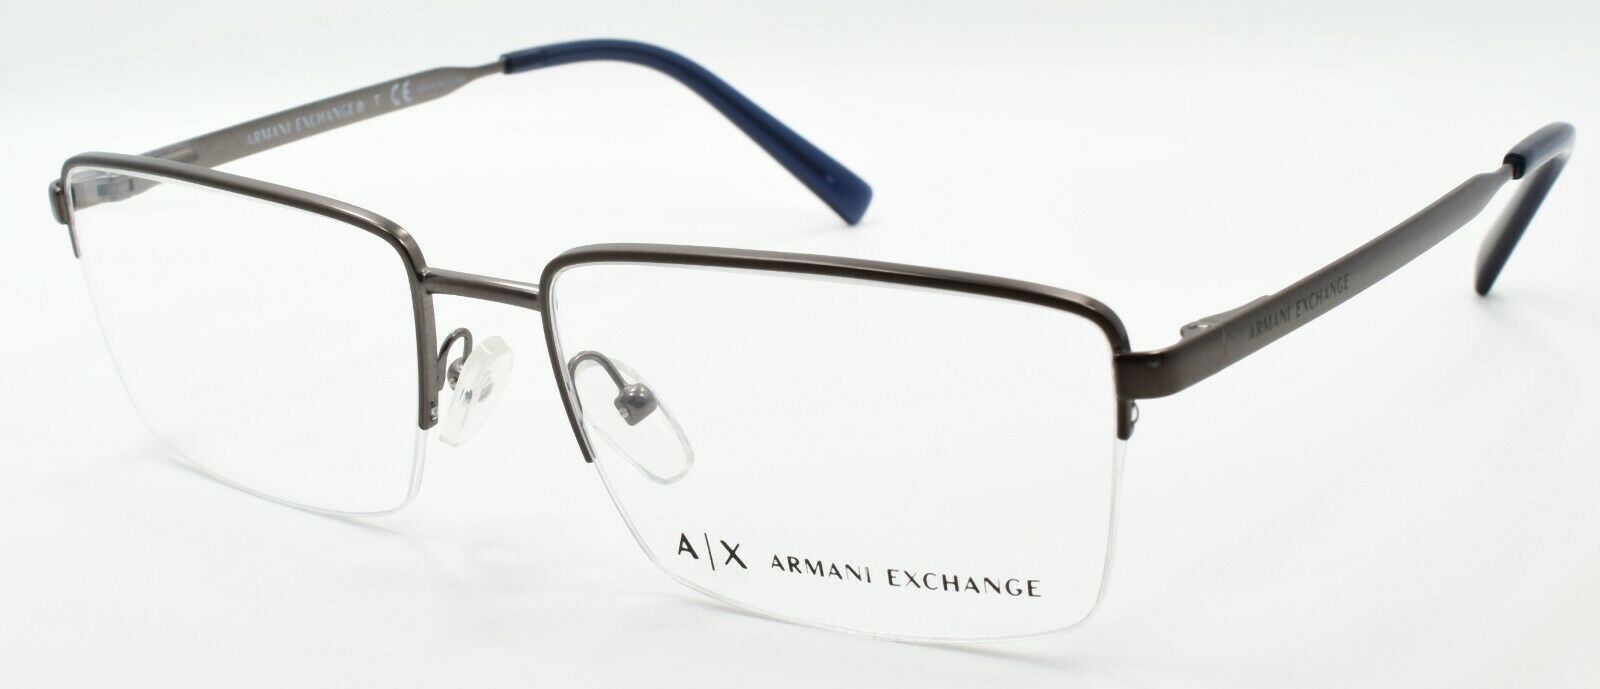 1-Armani Exchange AX1027 6008 Men's Glasses Frames Half-rim 54-17-140 Gunmetal-8053672798265-IKSpecs